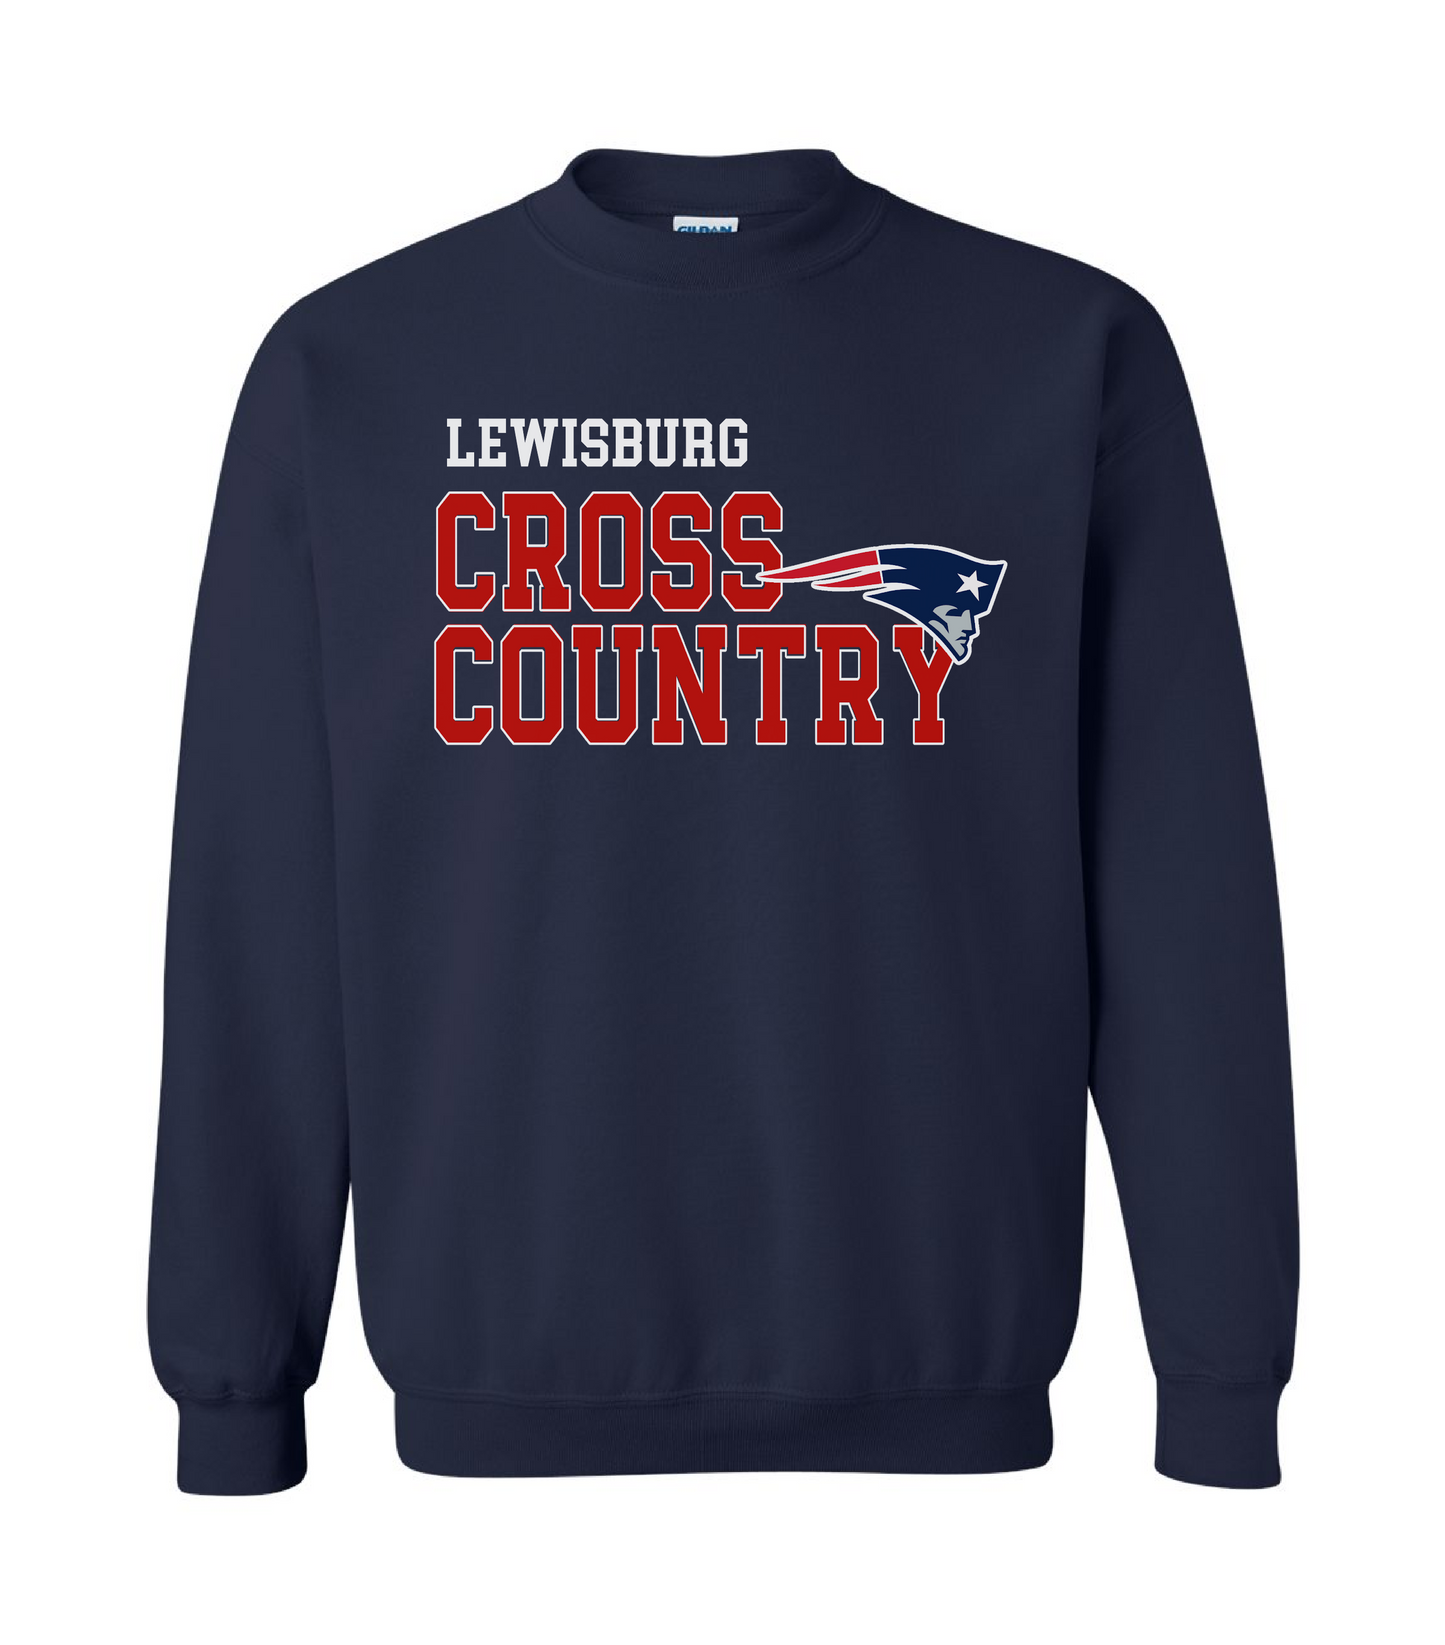 Lewisburg Cross Country Unisex Sweatshirt - Navy